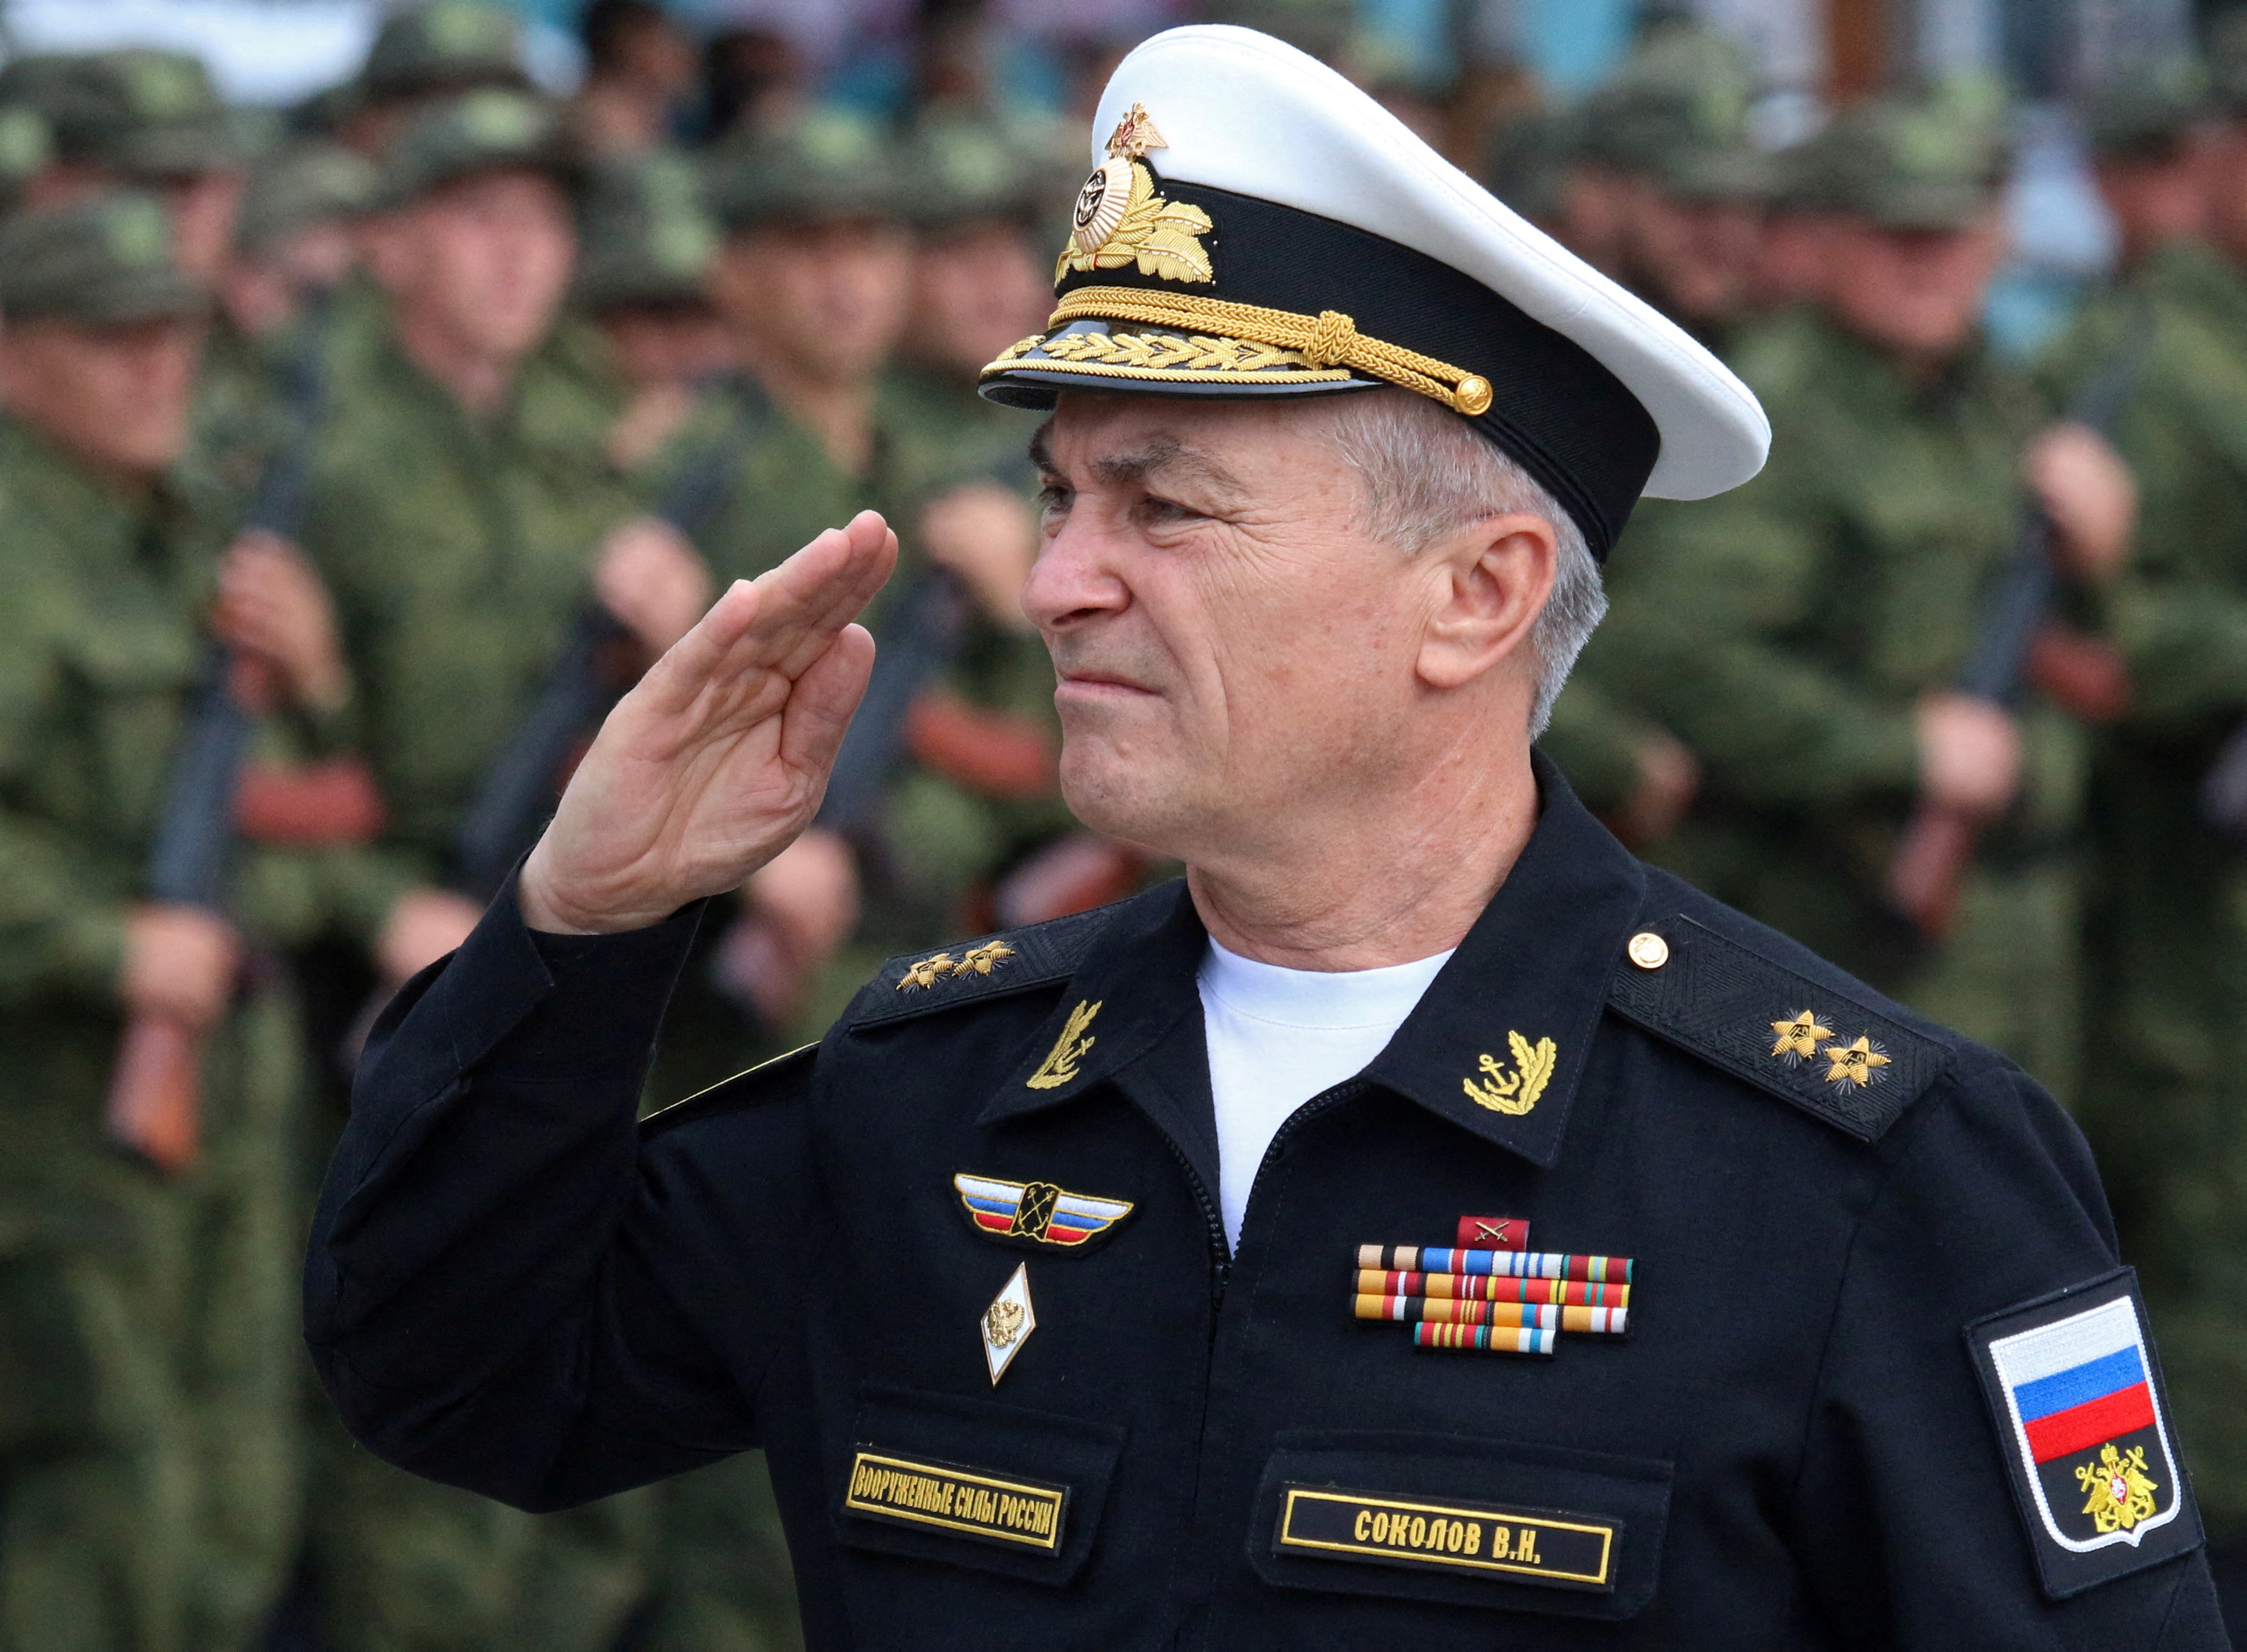 Commander of the Russian Black Sea Fleet Vice-Admiral Viktor Sokolov salutes during a ceremony in Sevastopol